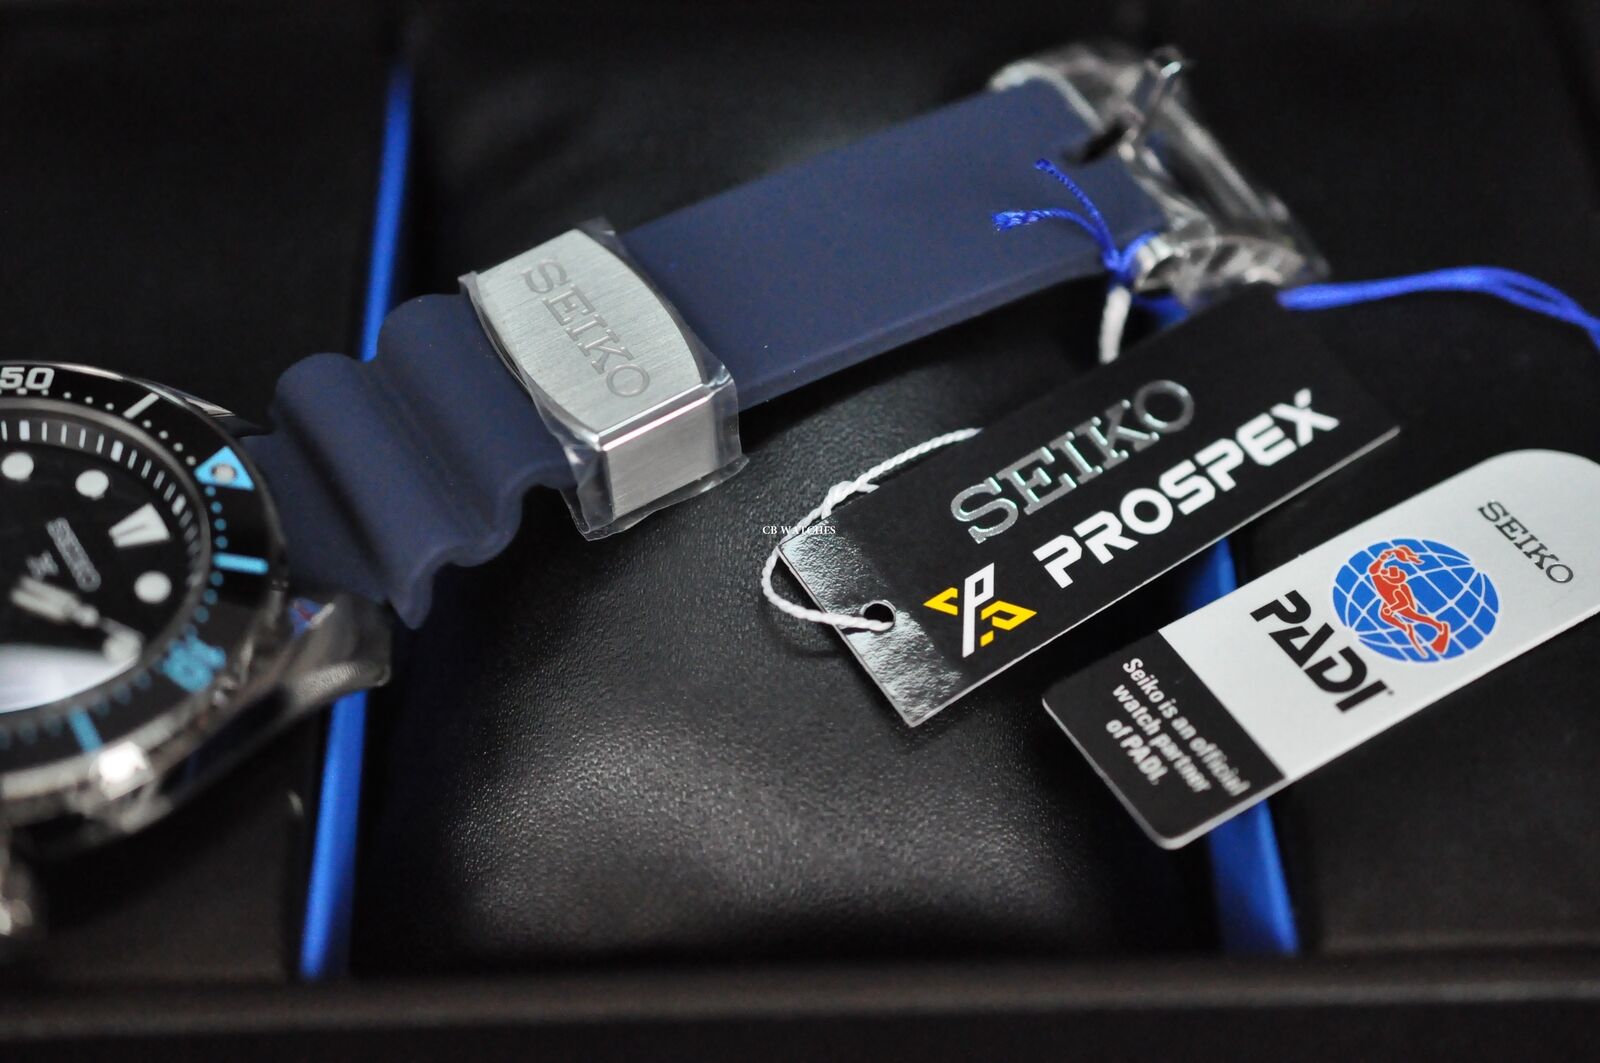 Seiko Prospex automatic steel 200M diver's watch SPB325J1